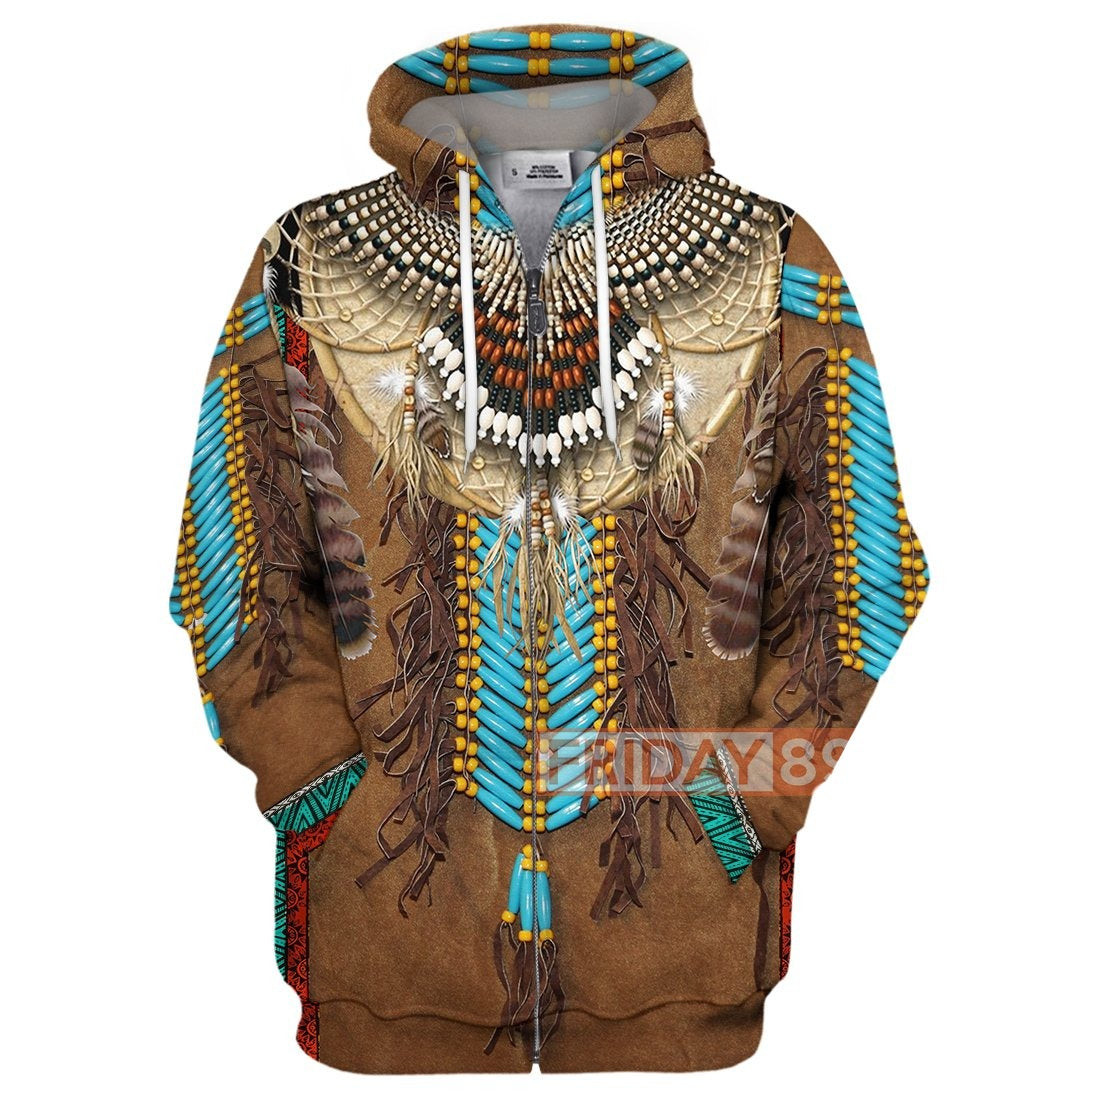 Unifinz Native American Hoodie Native Fringed Motifs T-shirt Awesome Native American Shirt Sweater Tank 2026